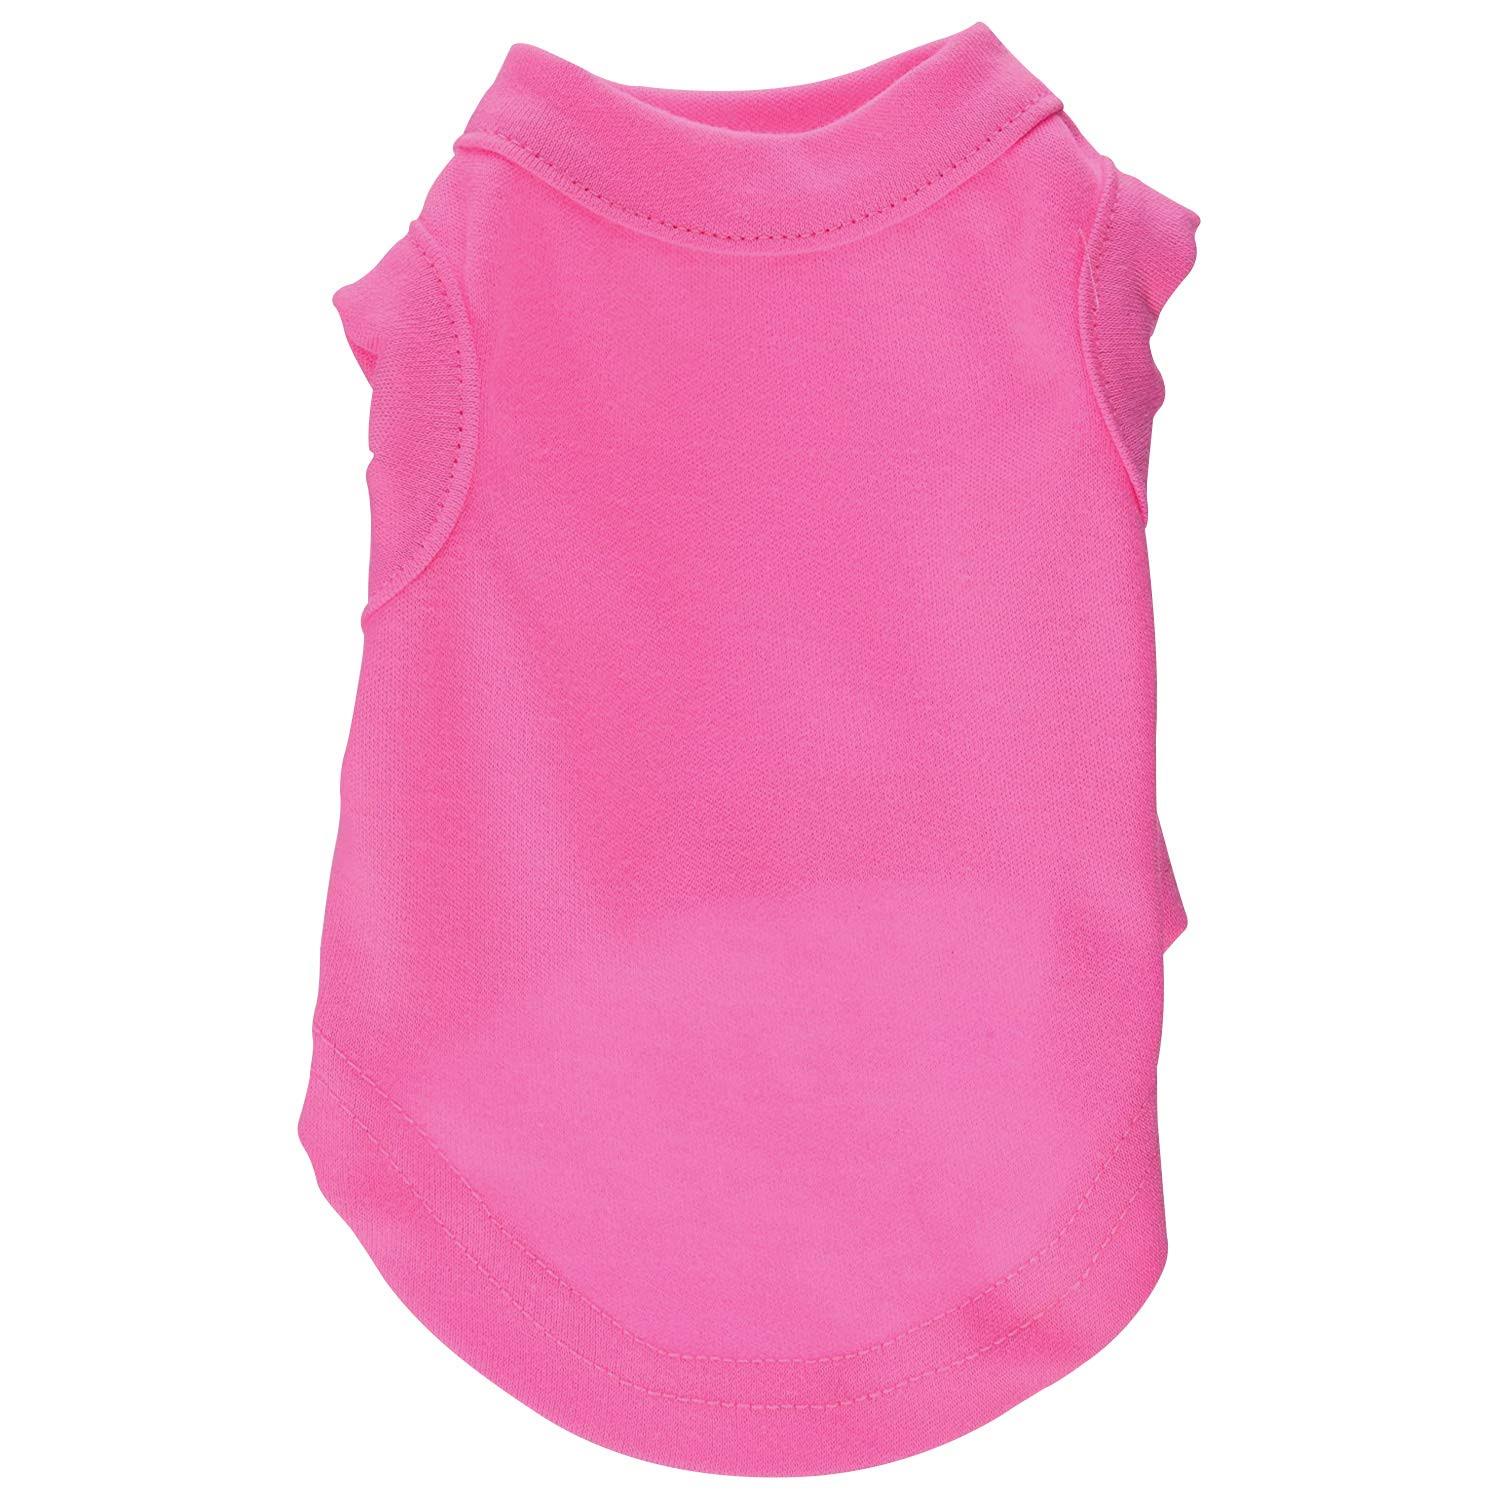 Mirage Pet Products Plain Dog Shirt - Bright Pink, X-Small, 8"